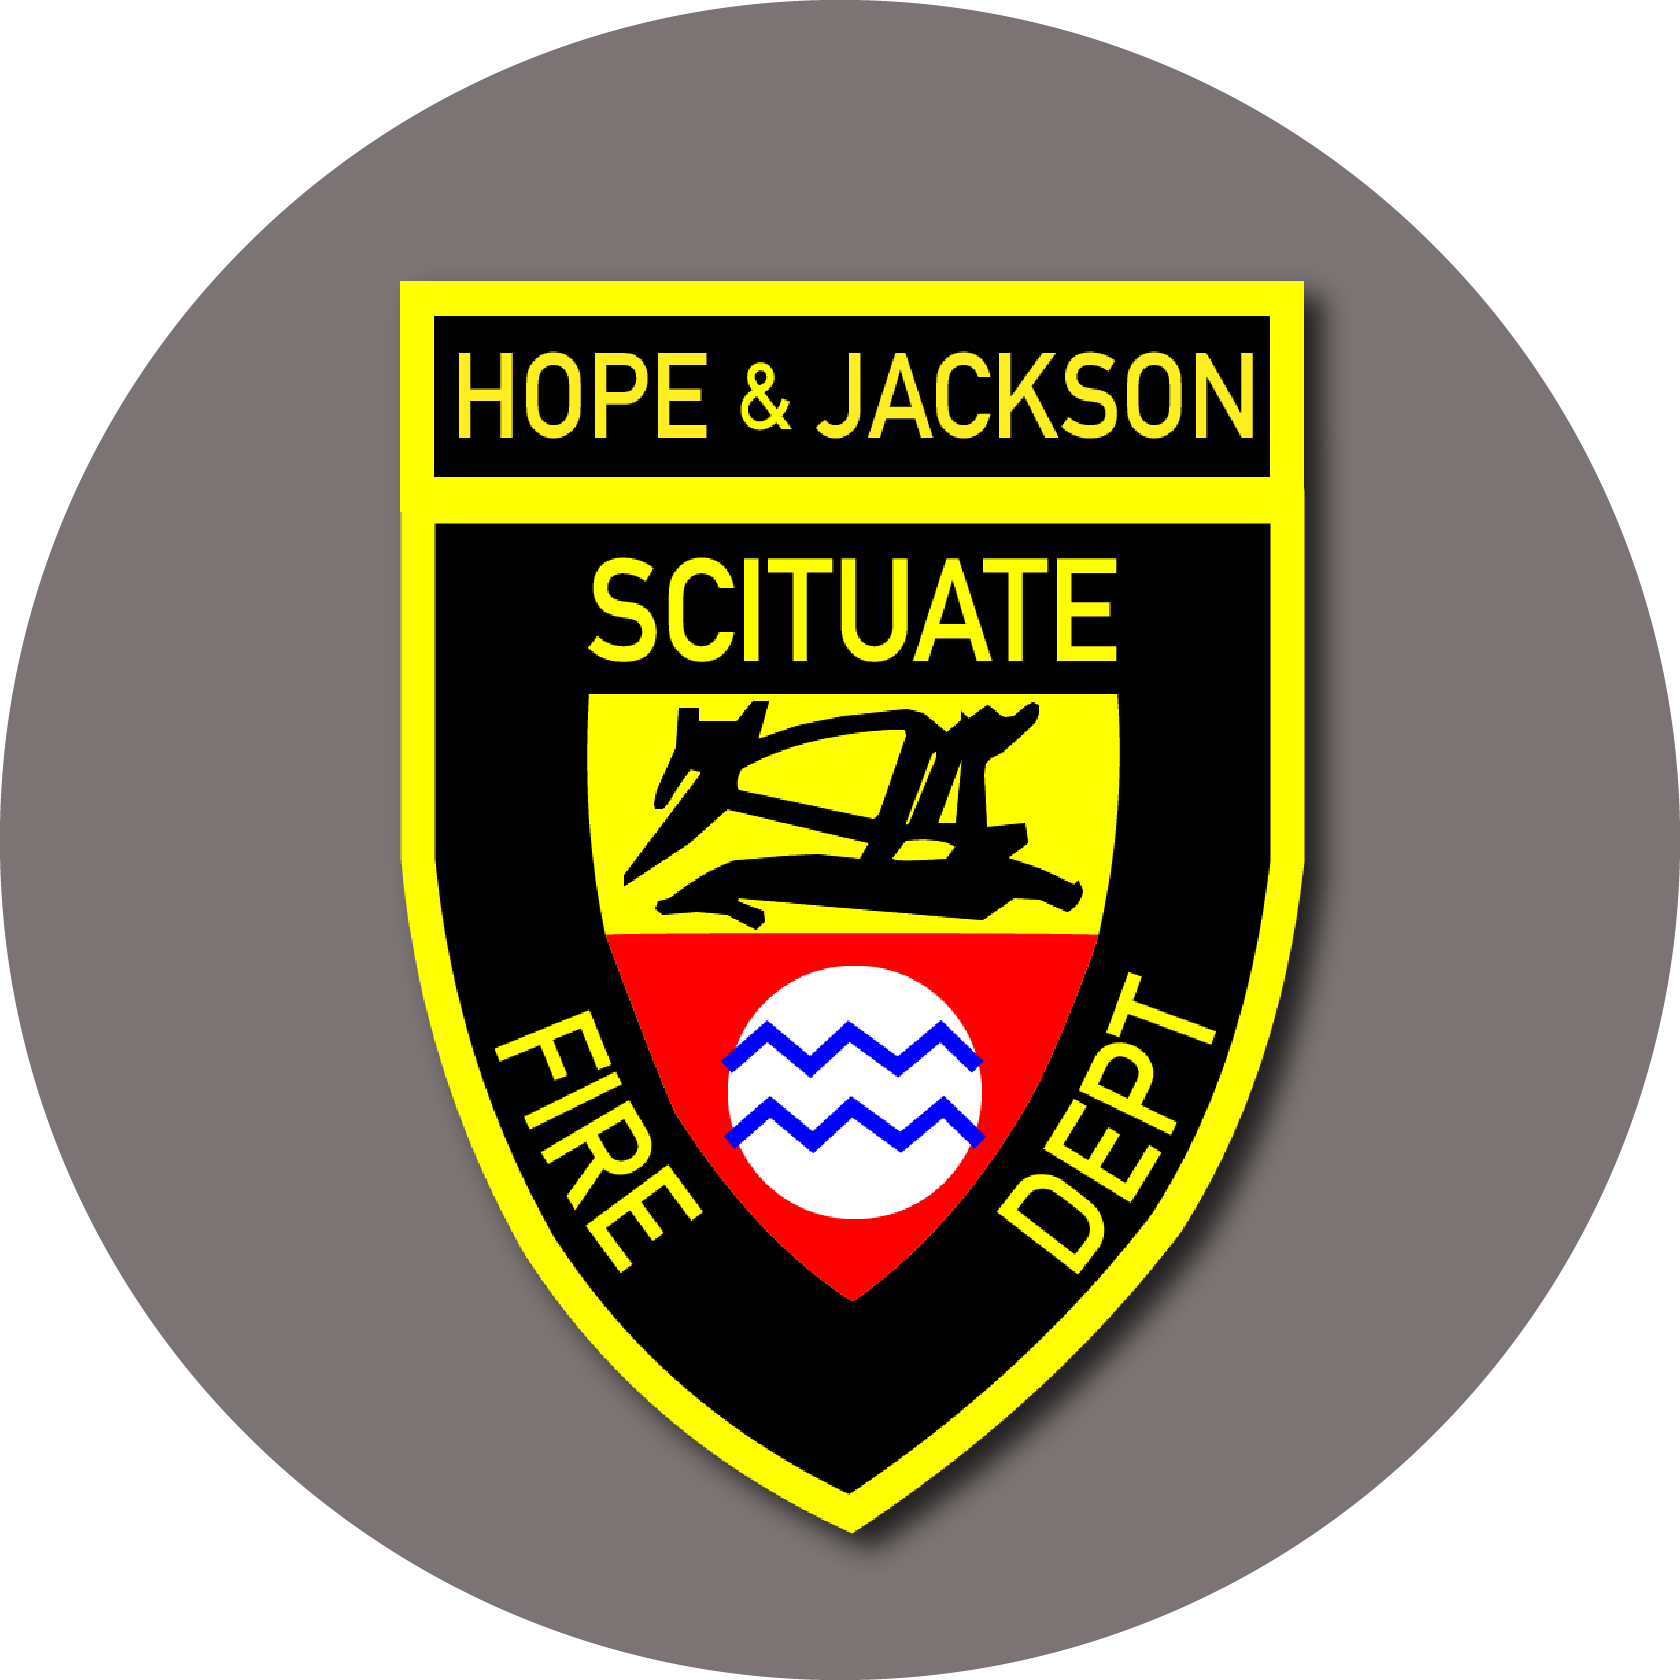 Hope & Jackson Fire Department